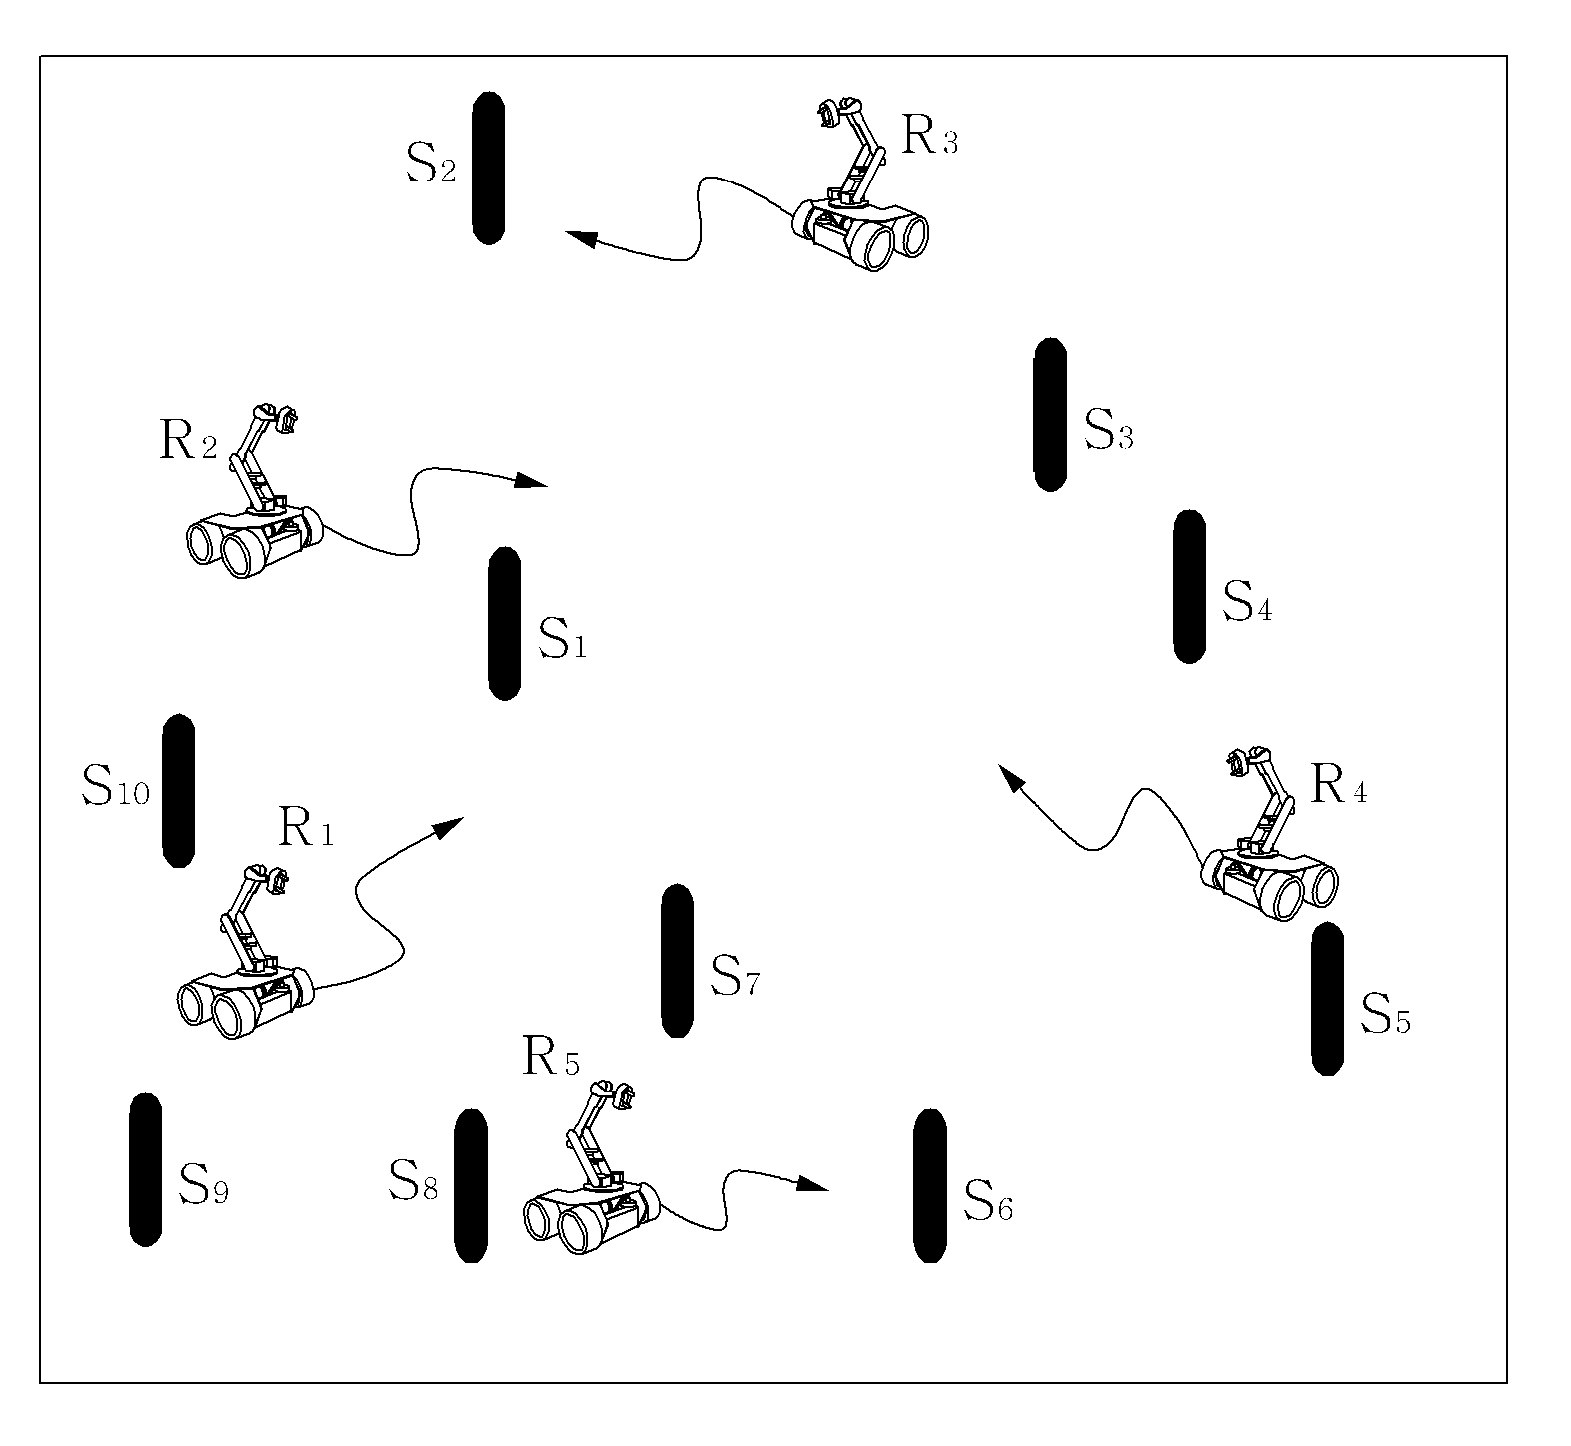 Swarm robot and sweeping method using swarm robot